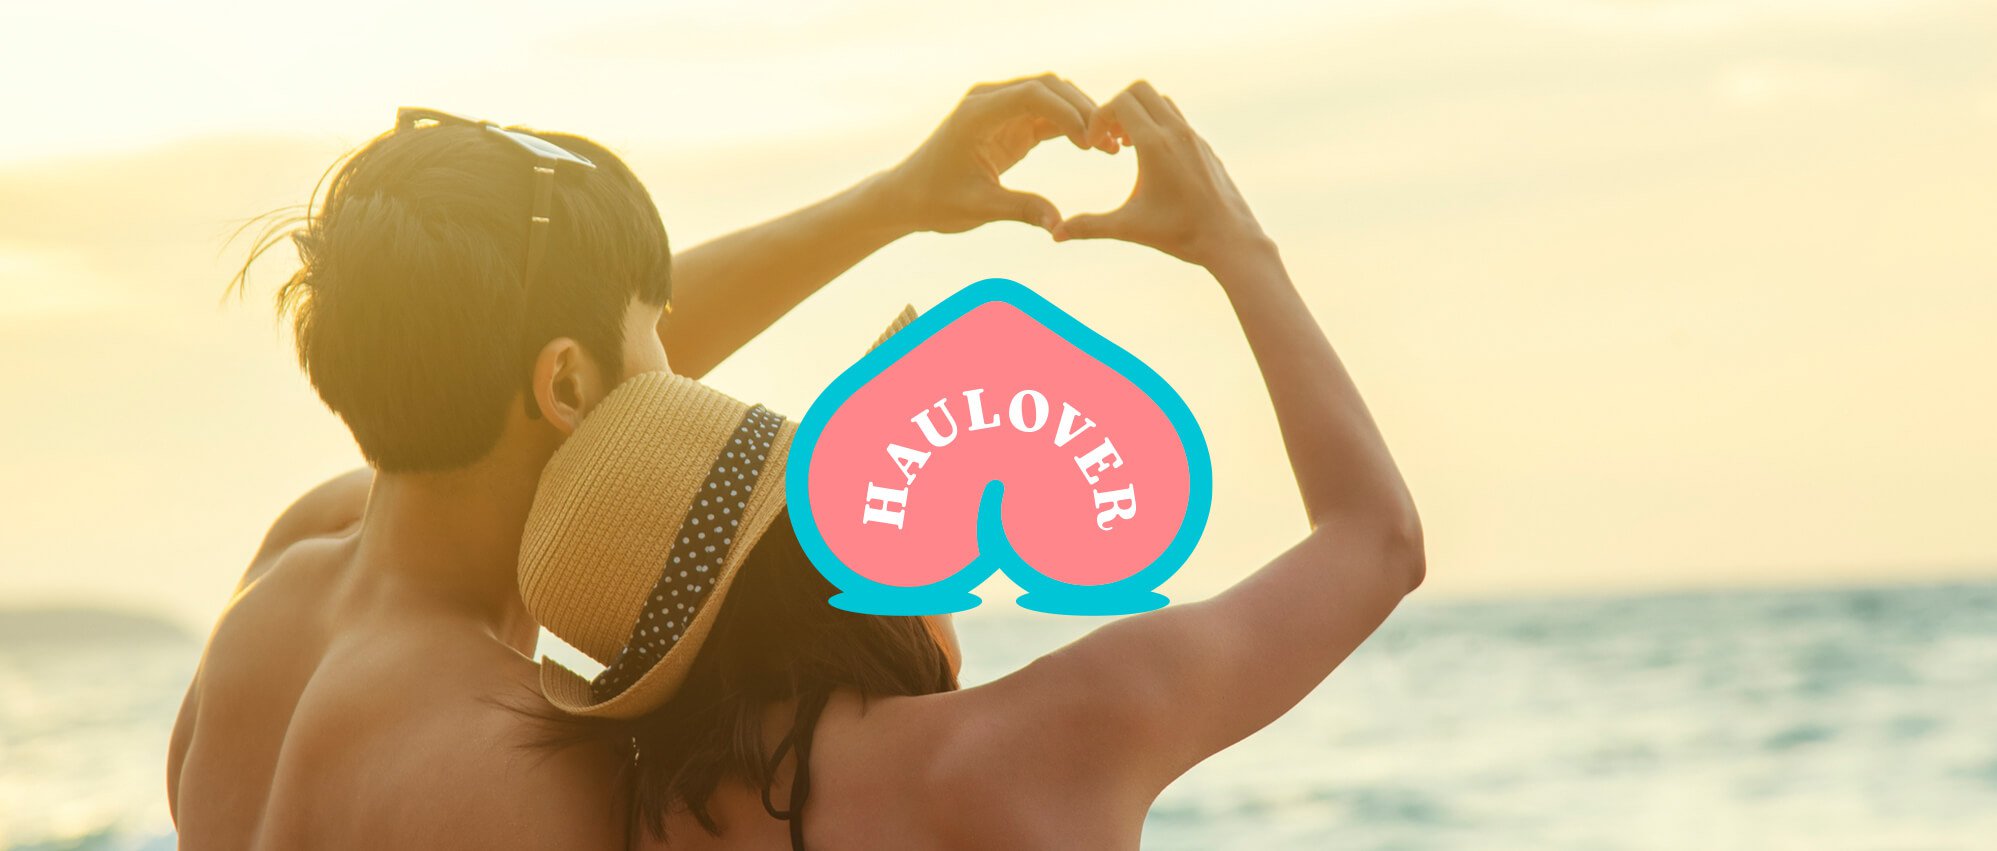 Jacober Creative Brand Identity for Haulover Nude Beach